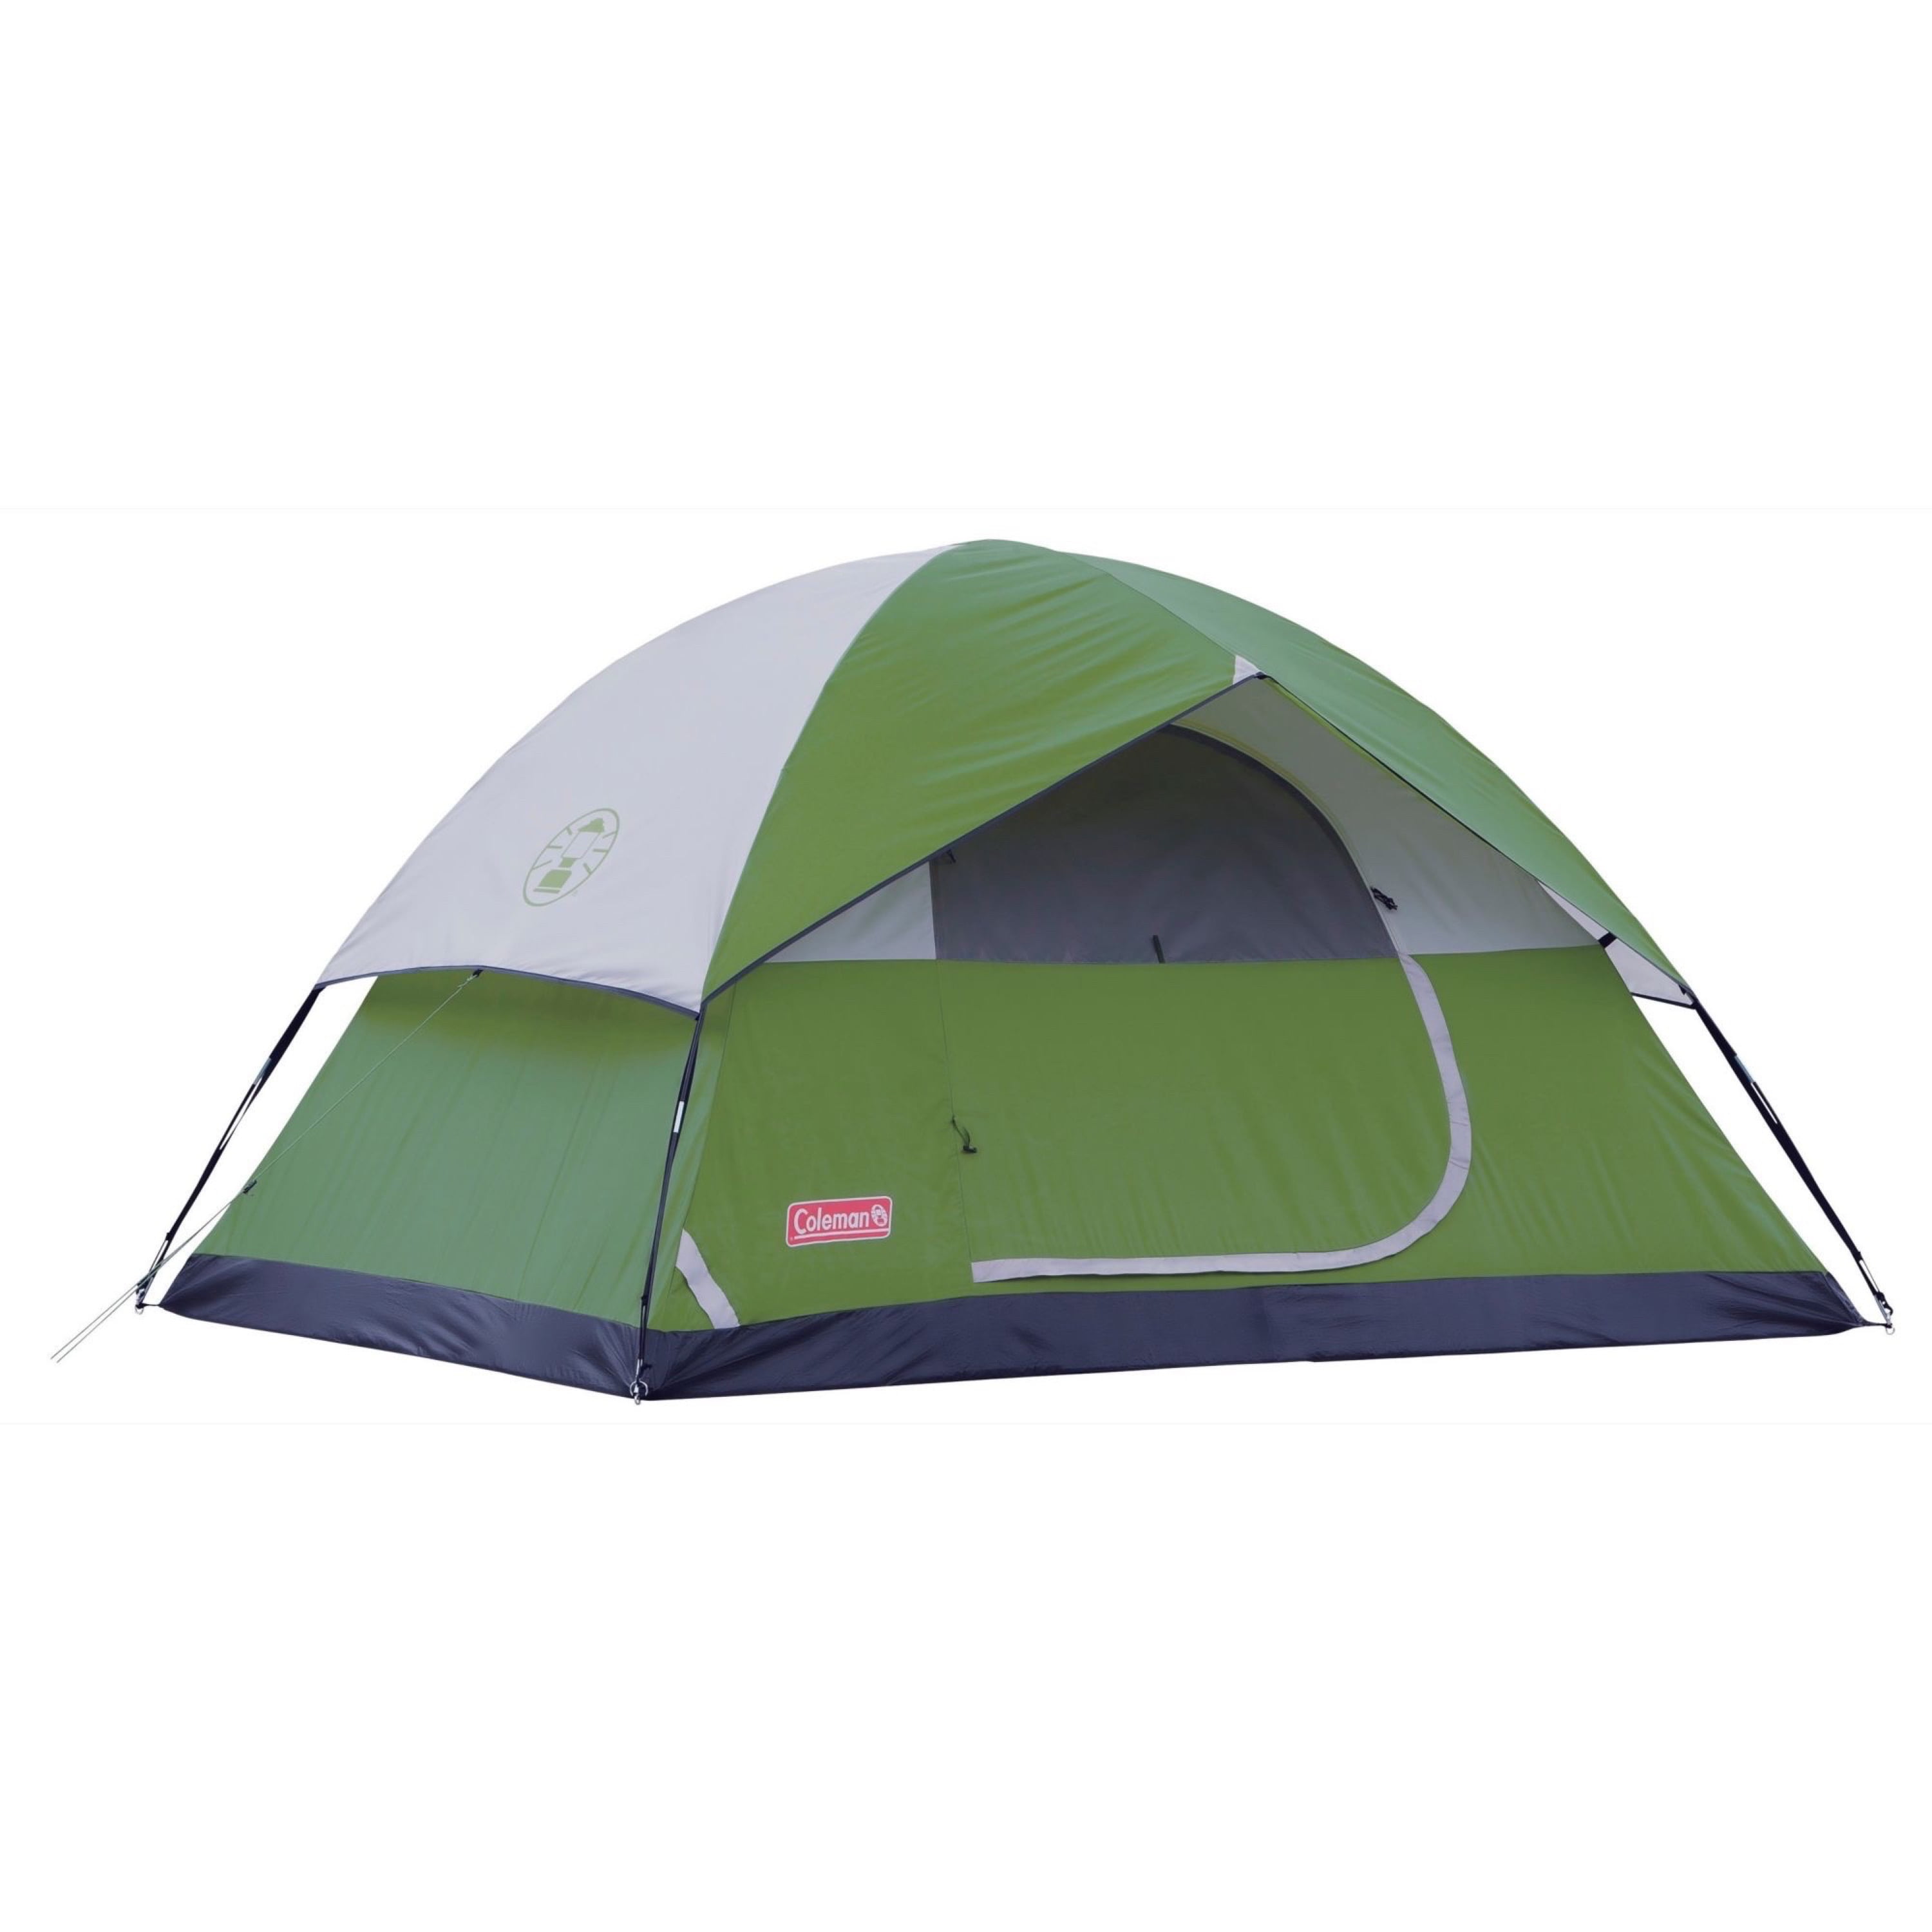 Wijzer Majestueus venster Coleman Sundome 4-Person Dome Camping Tent, 1 Room, Green - Walmart.com